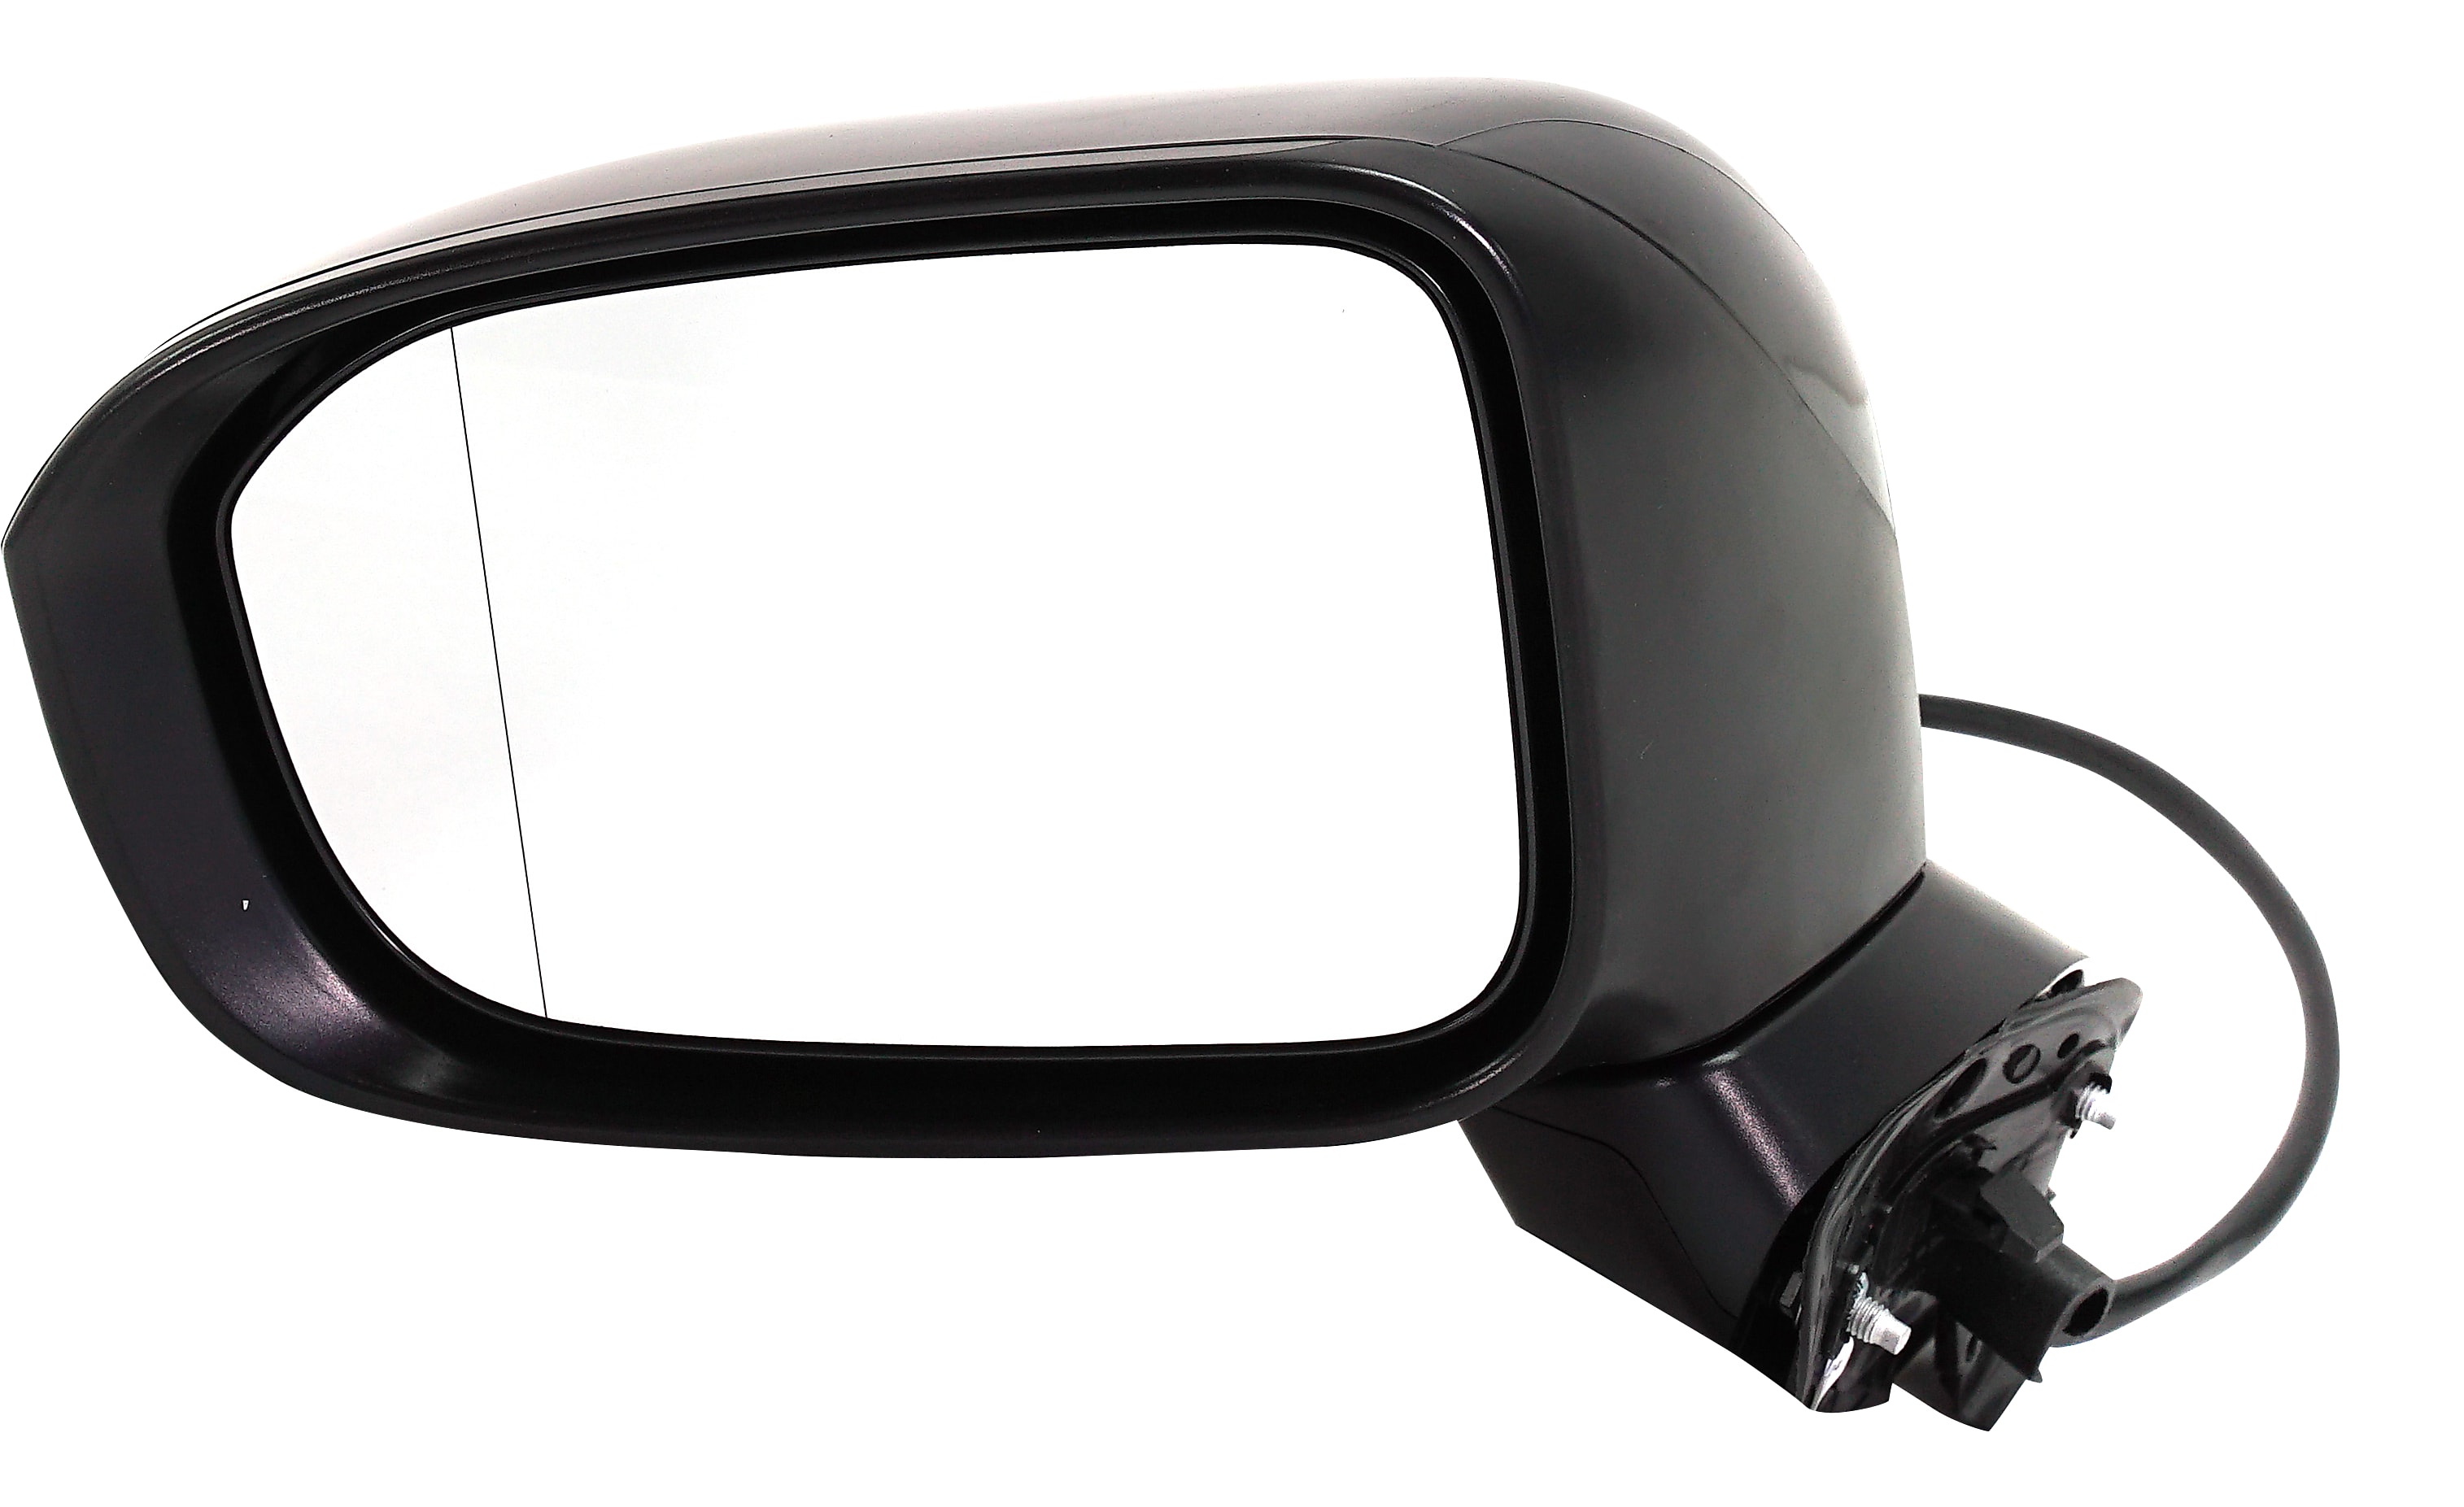 2015 Honda Civic Mirrors from $67 | CarParts.com 2015 Honda Civic Driver Side Mirror Replacement